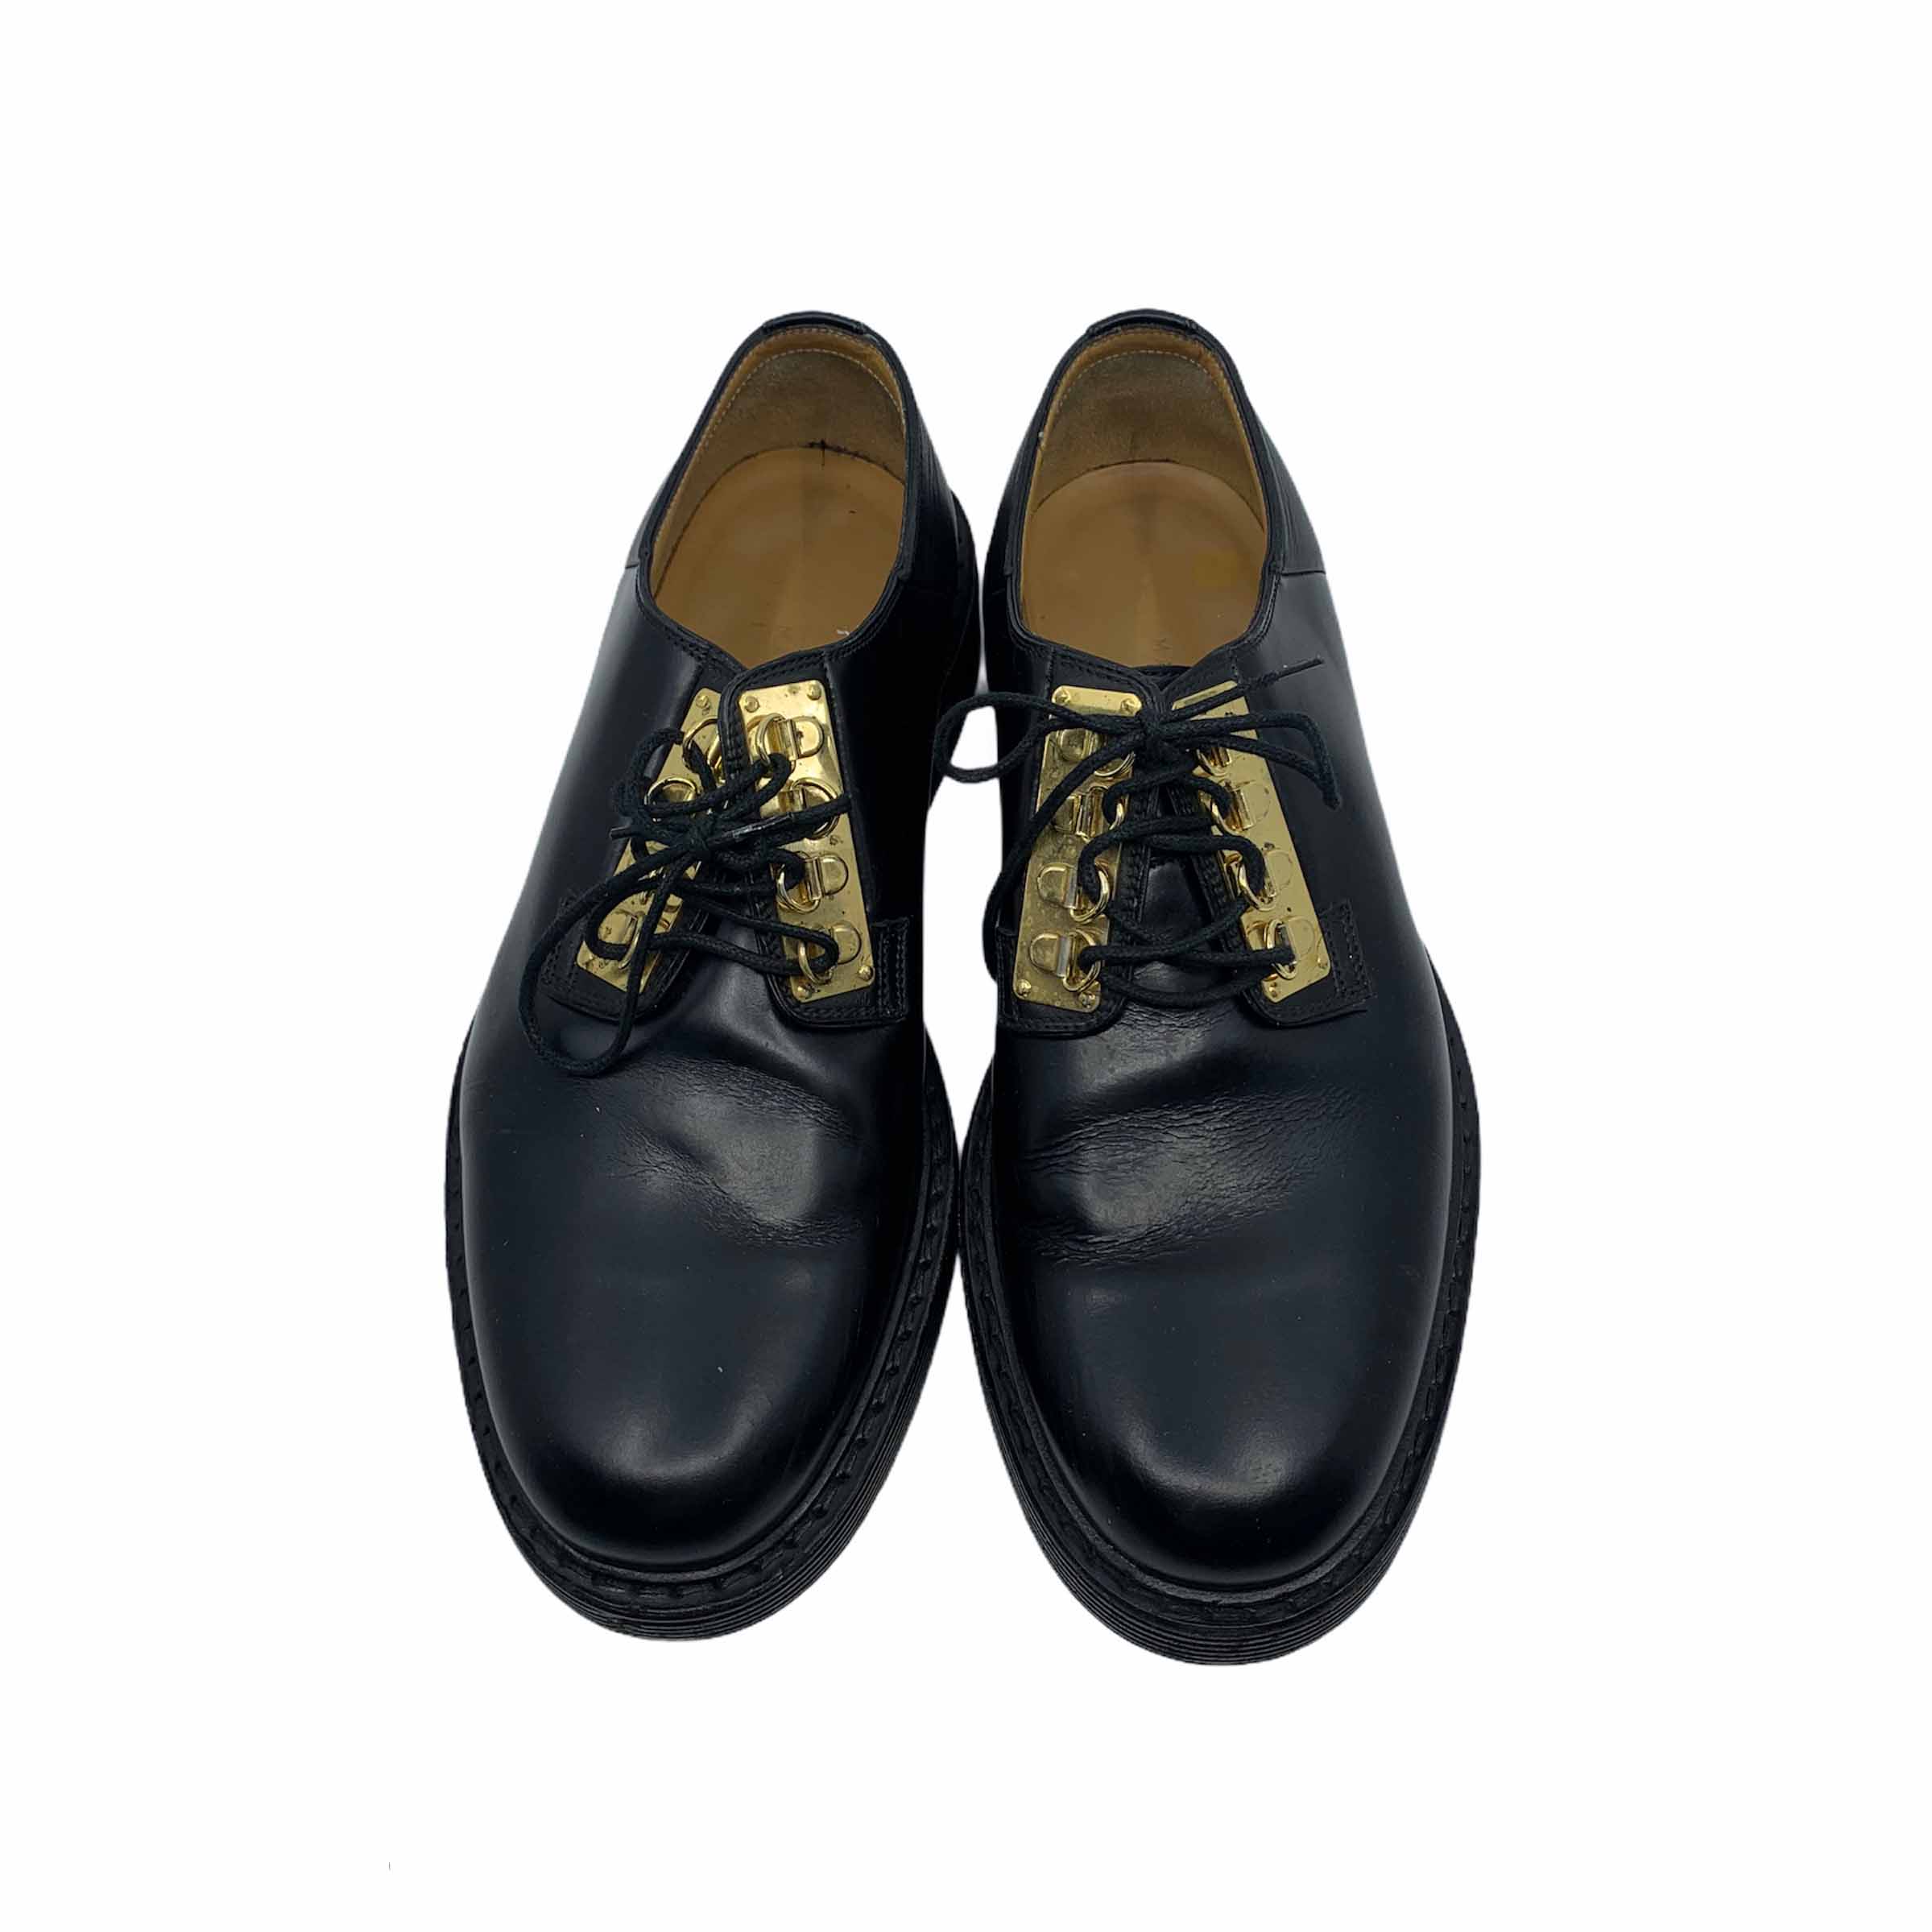 [Marc Jacobs] Gold Detail Lace-up Shoes - Size 41